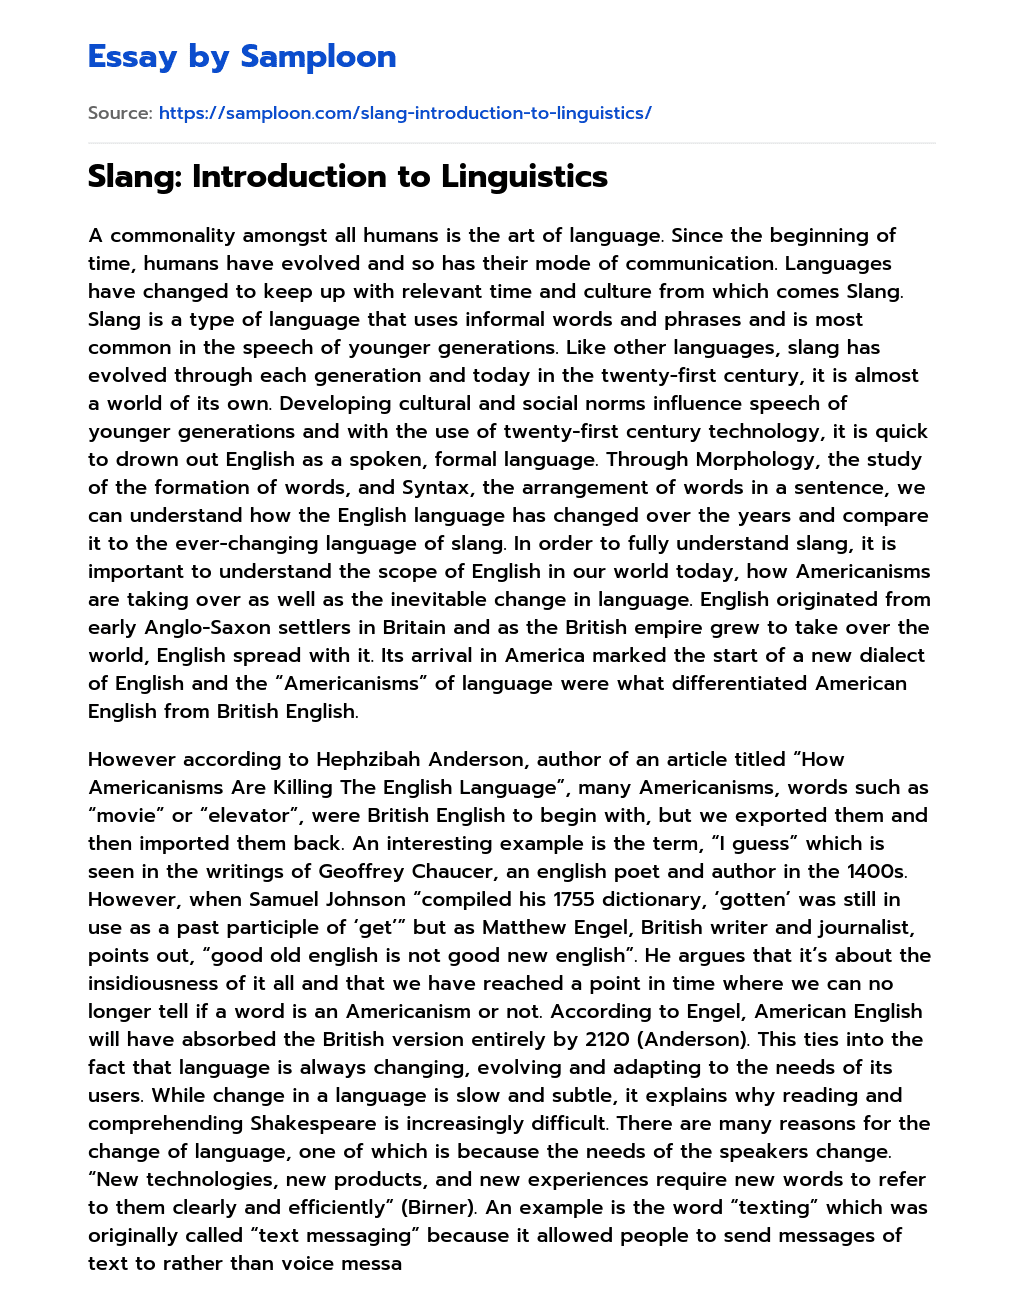 Slang: Introduction to Linguistics essay